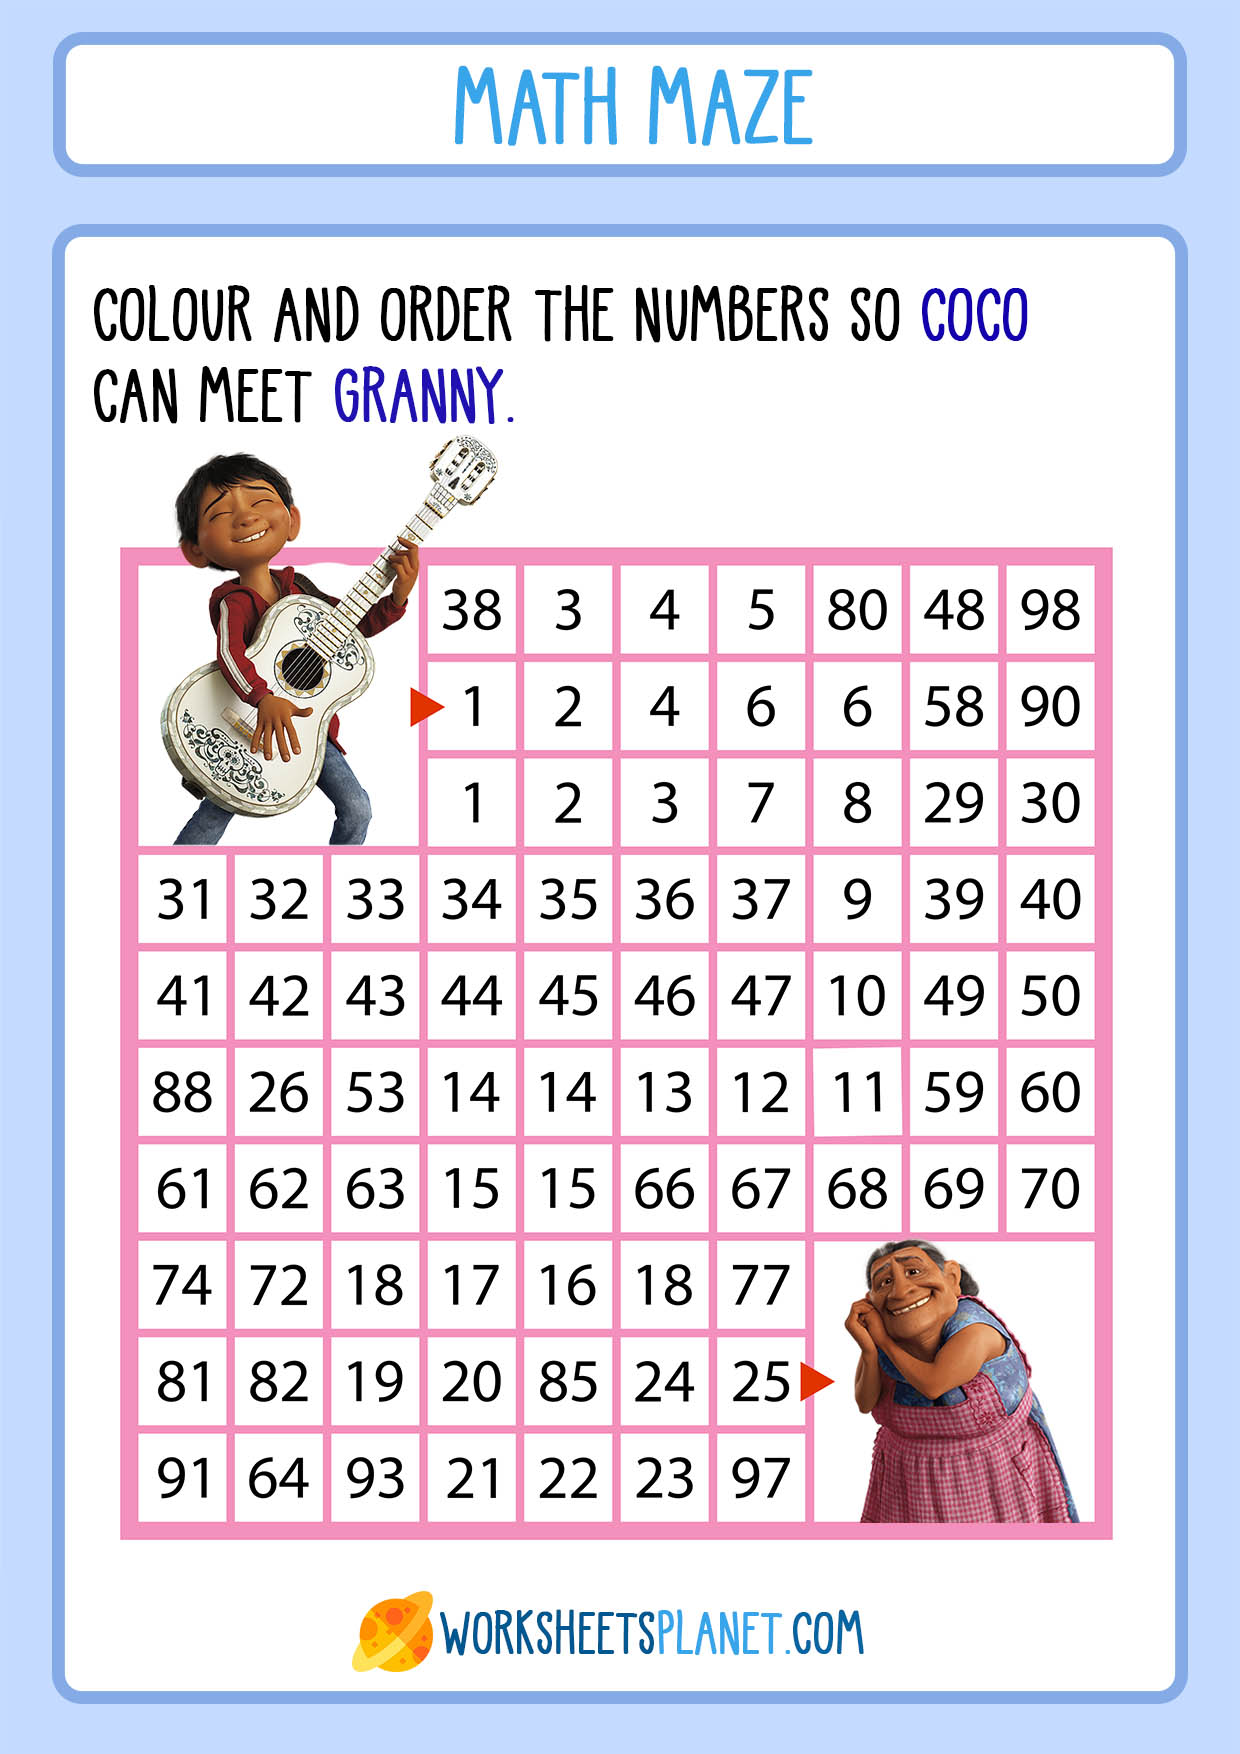 printable-math-maze-games-for-kids-worksheets-planet